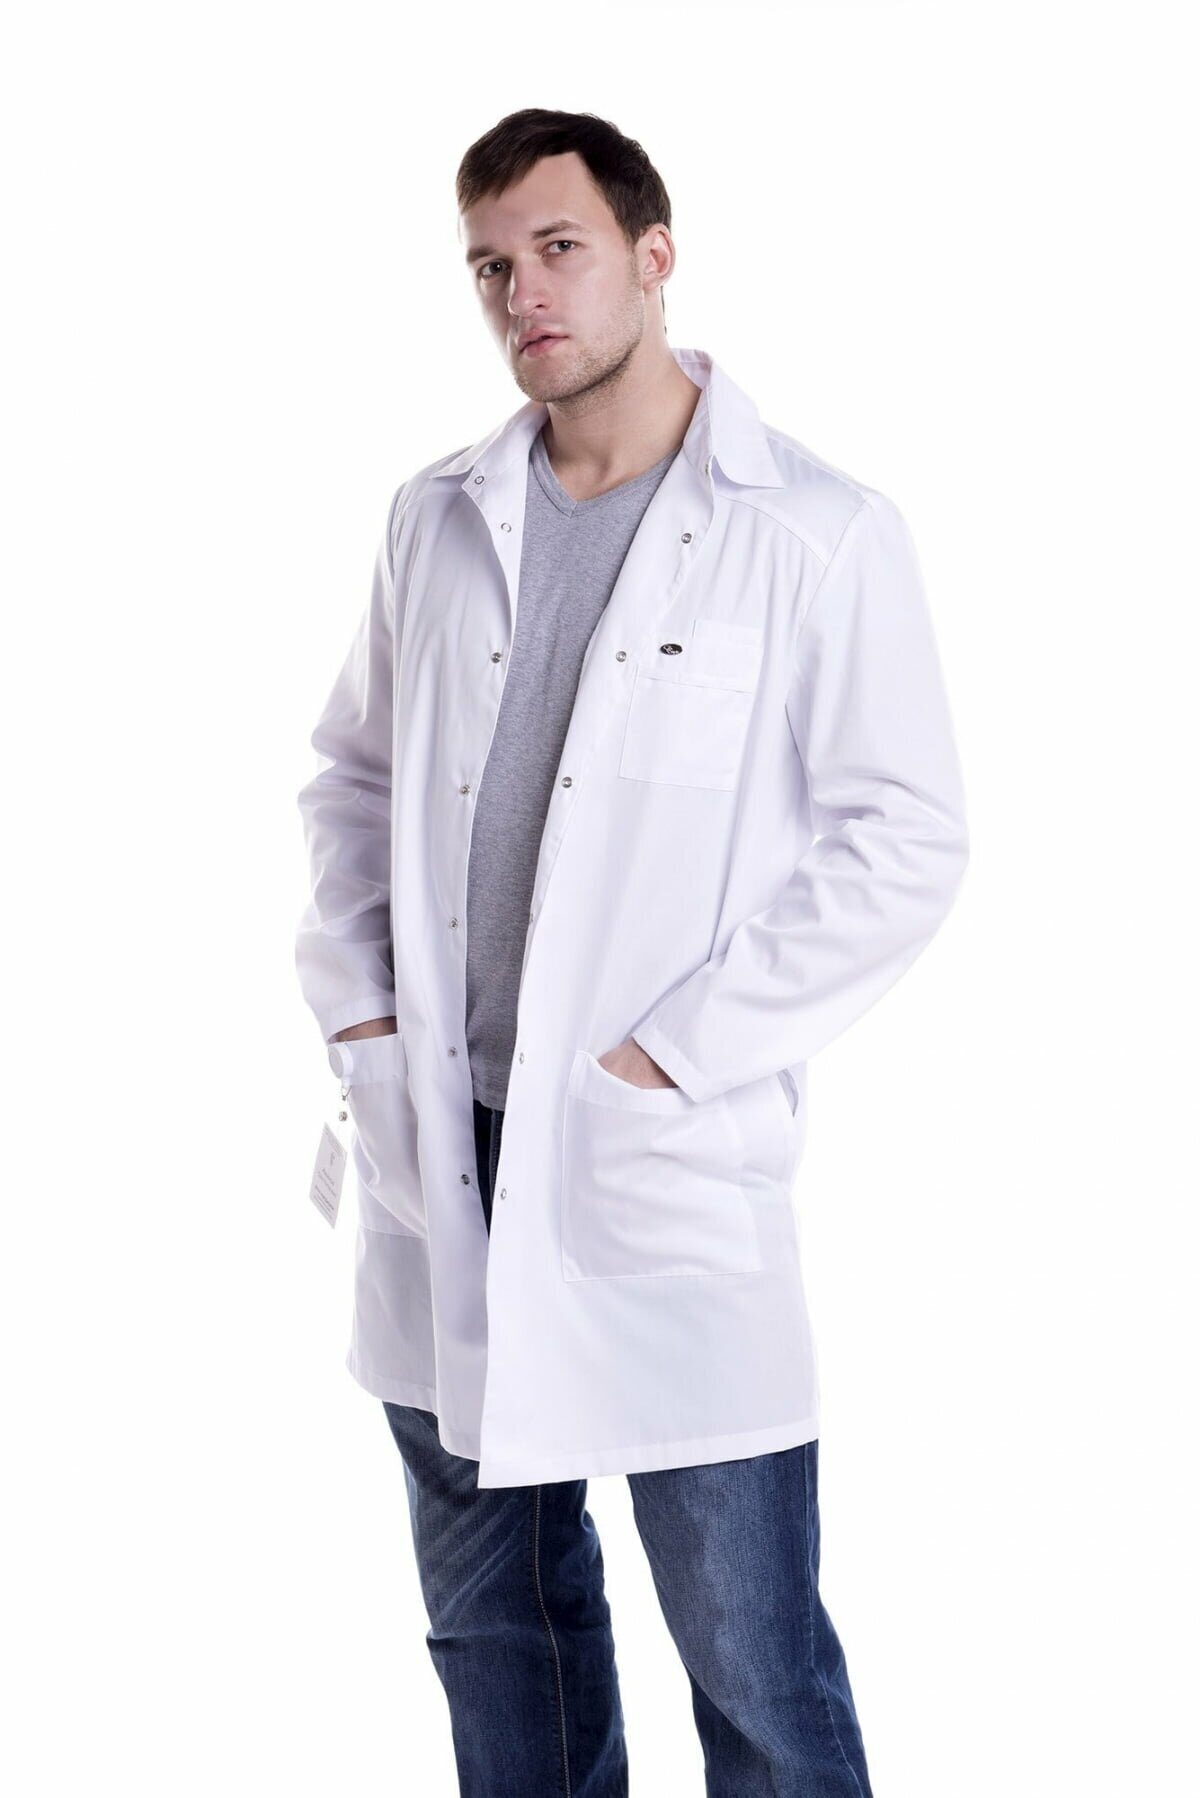 Белый халат медицинский мужской. Халат медицинский мужской. Доктор в халате. Докторский халат.